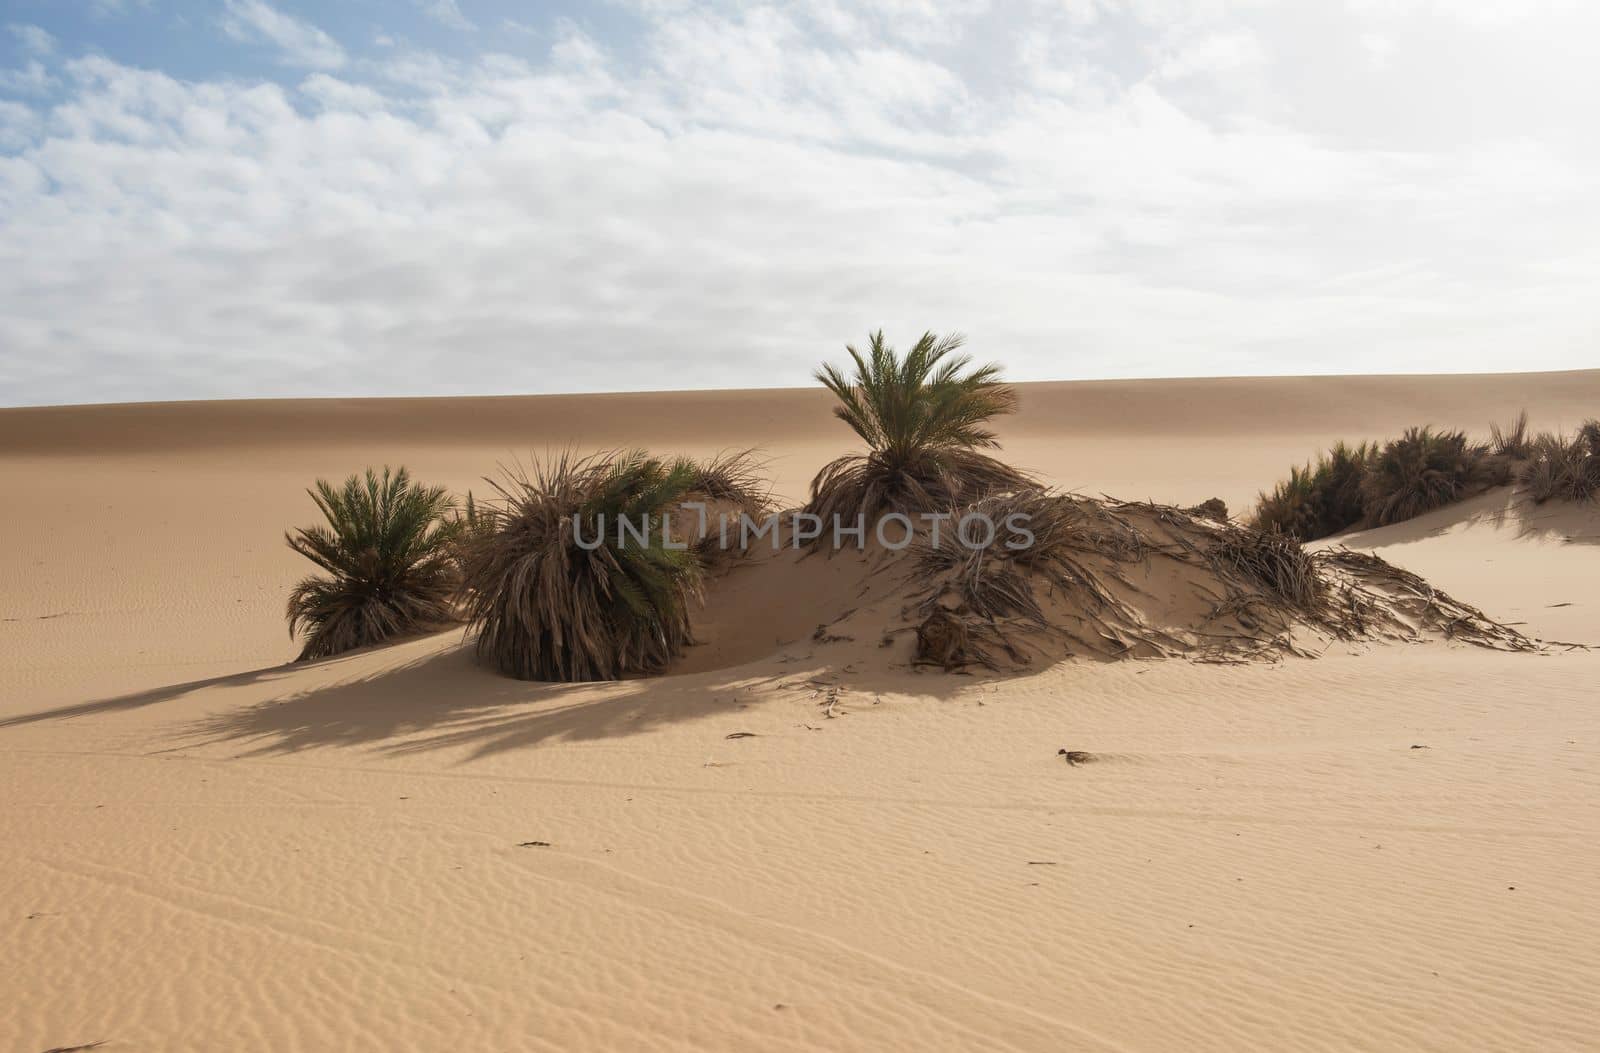 Barren desert landscape in hot climate with bushes by paulvinten